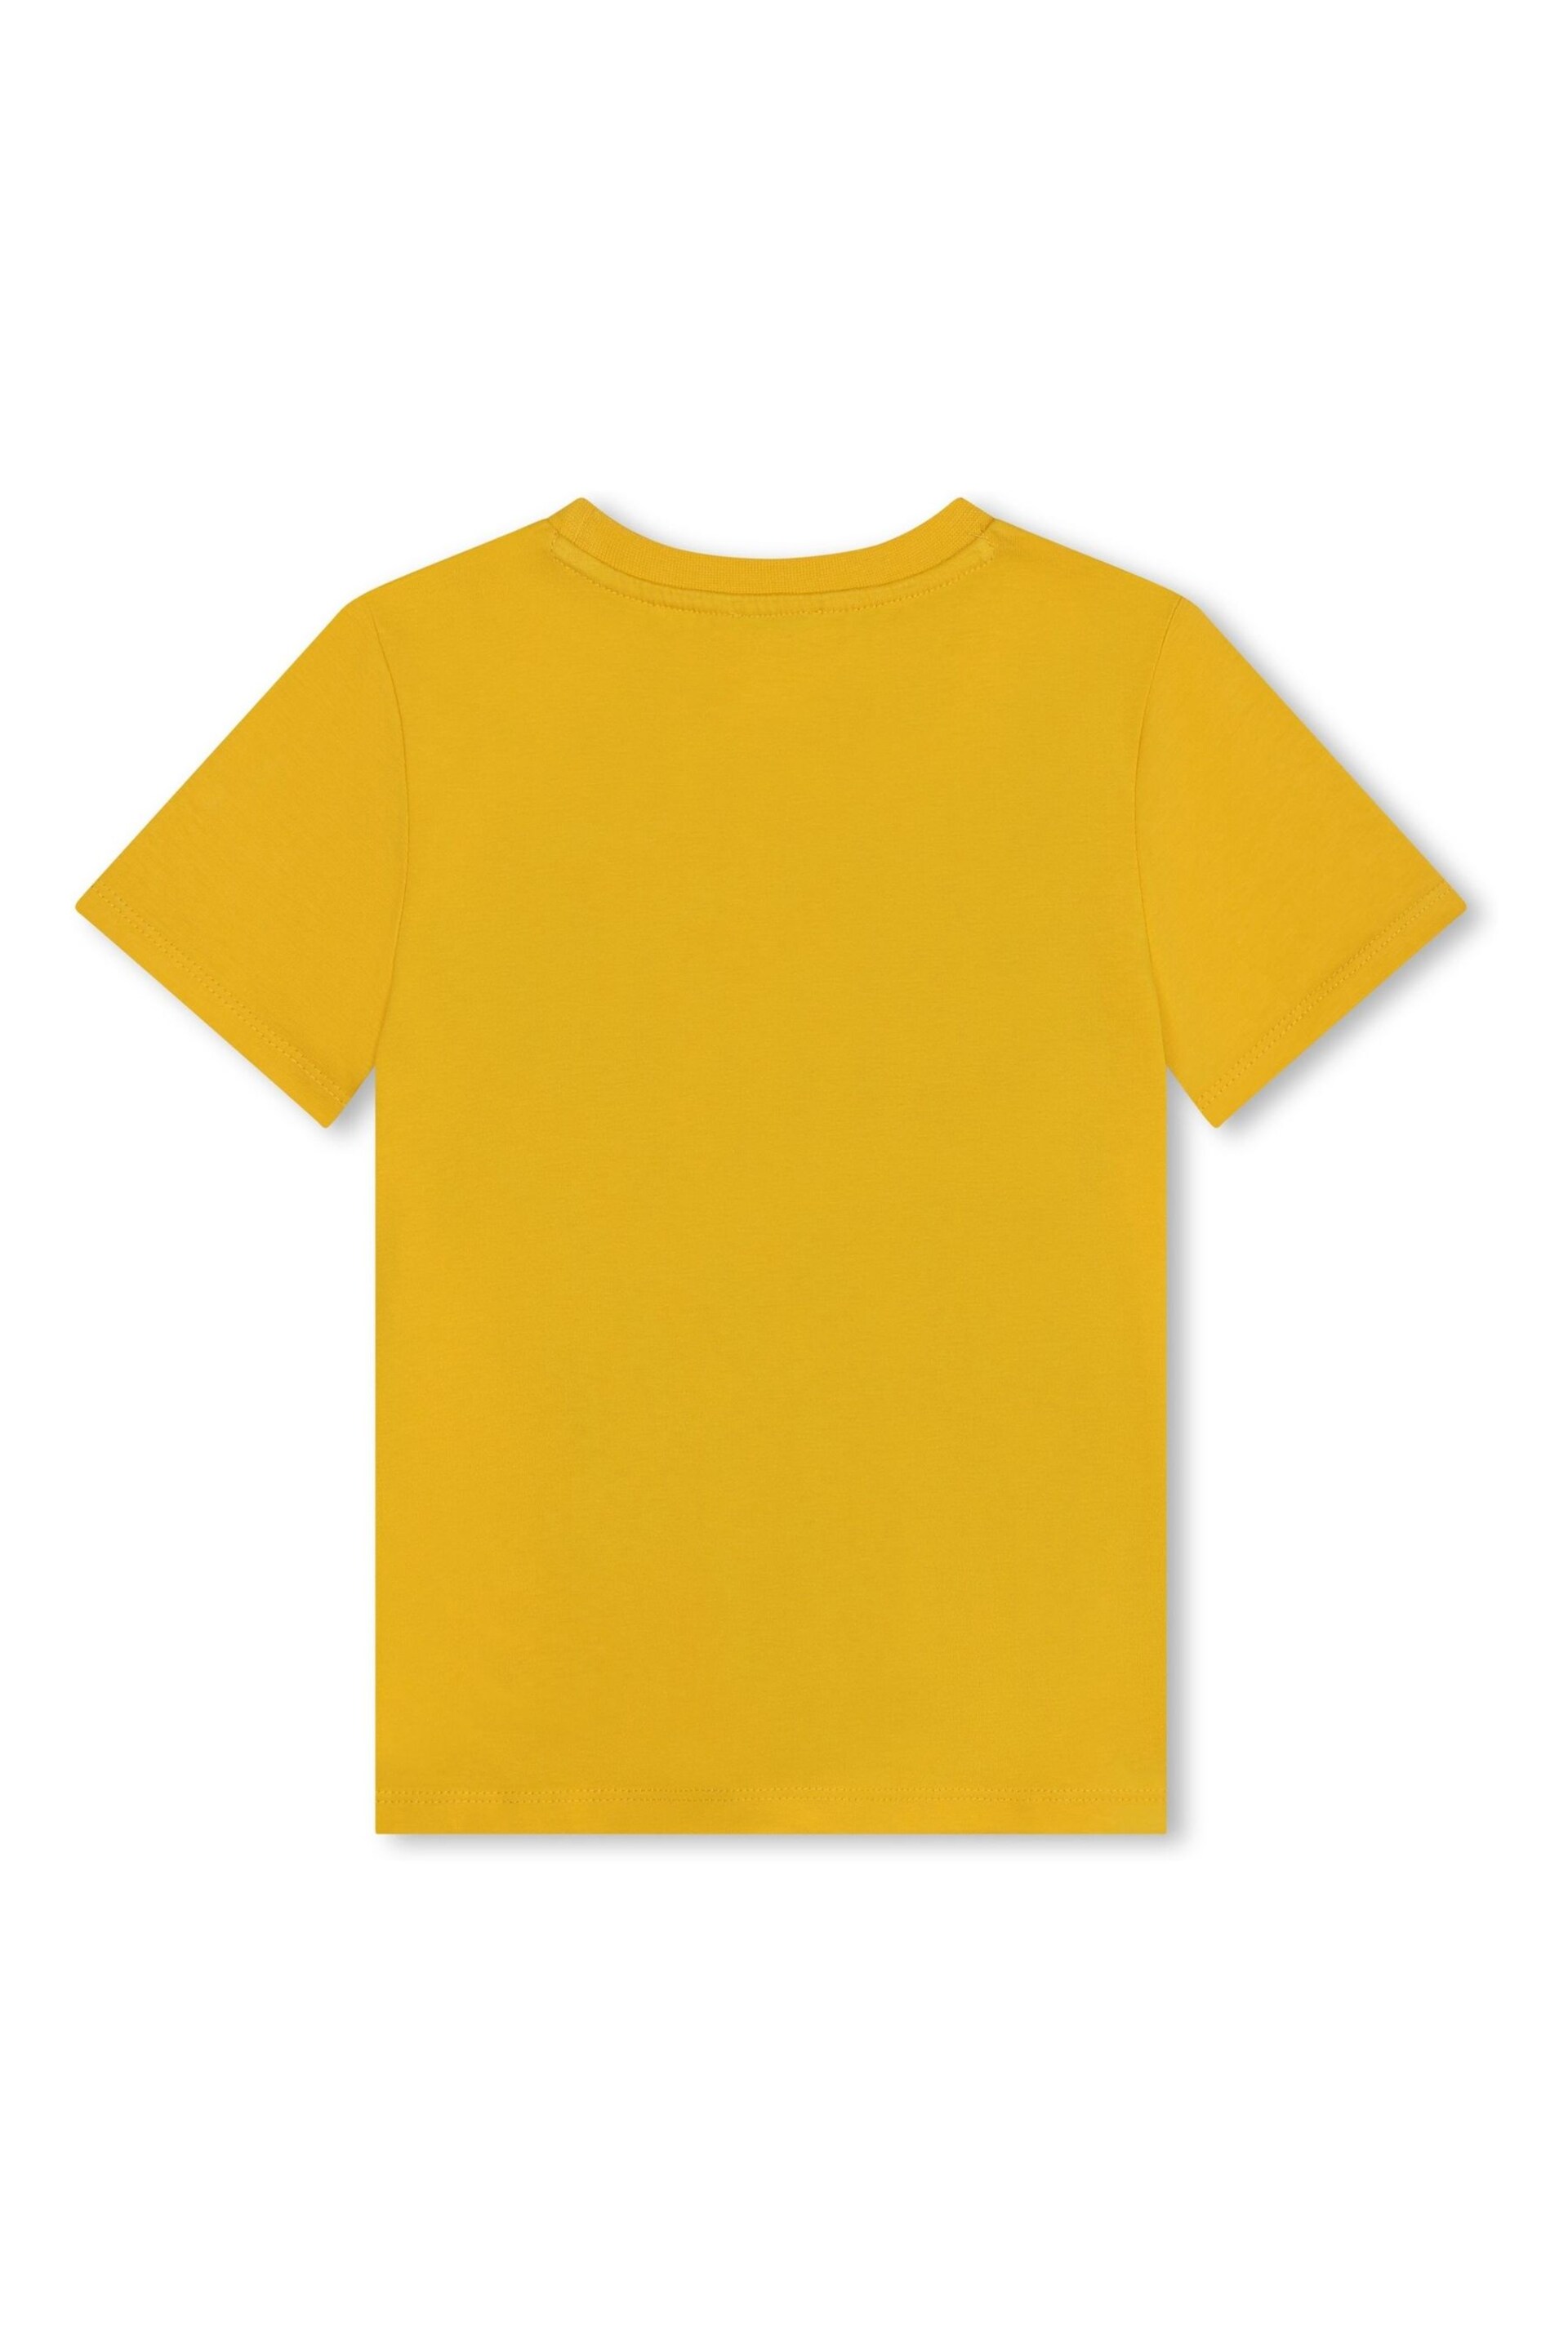 KENZO KIDS Yellow Elephant Logo T-Shirt - Image 4 of 4